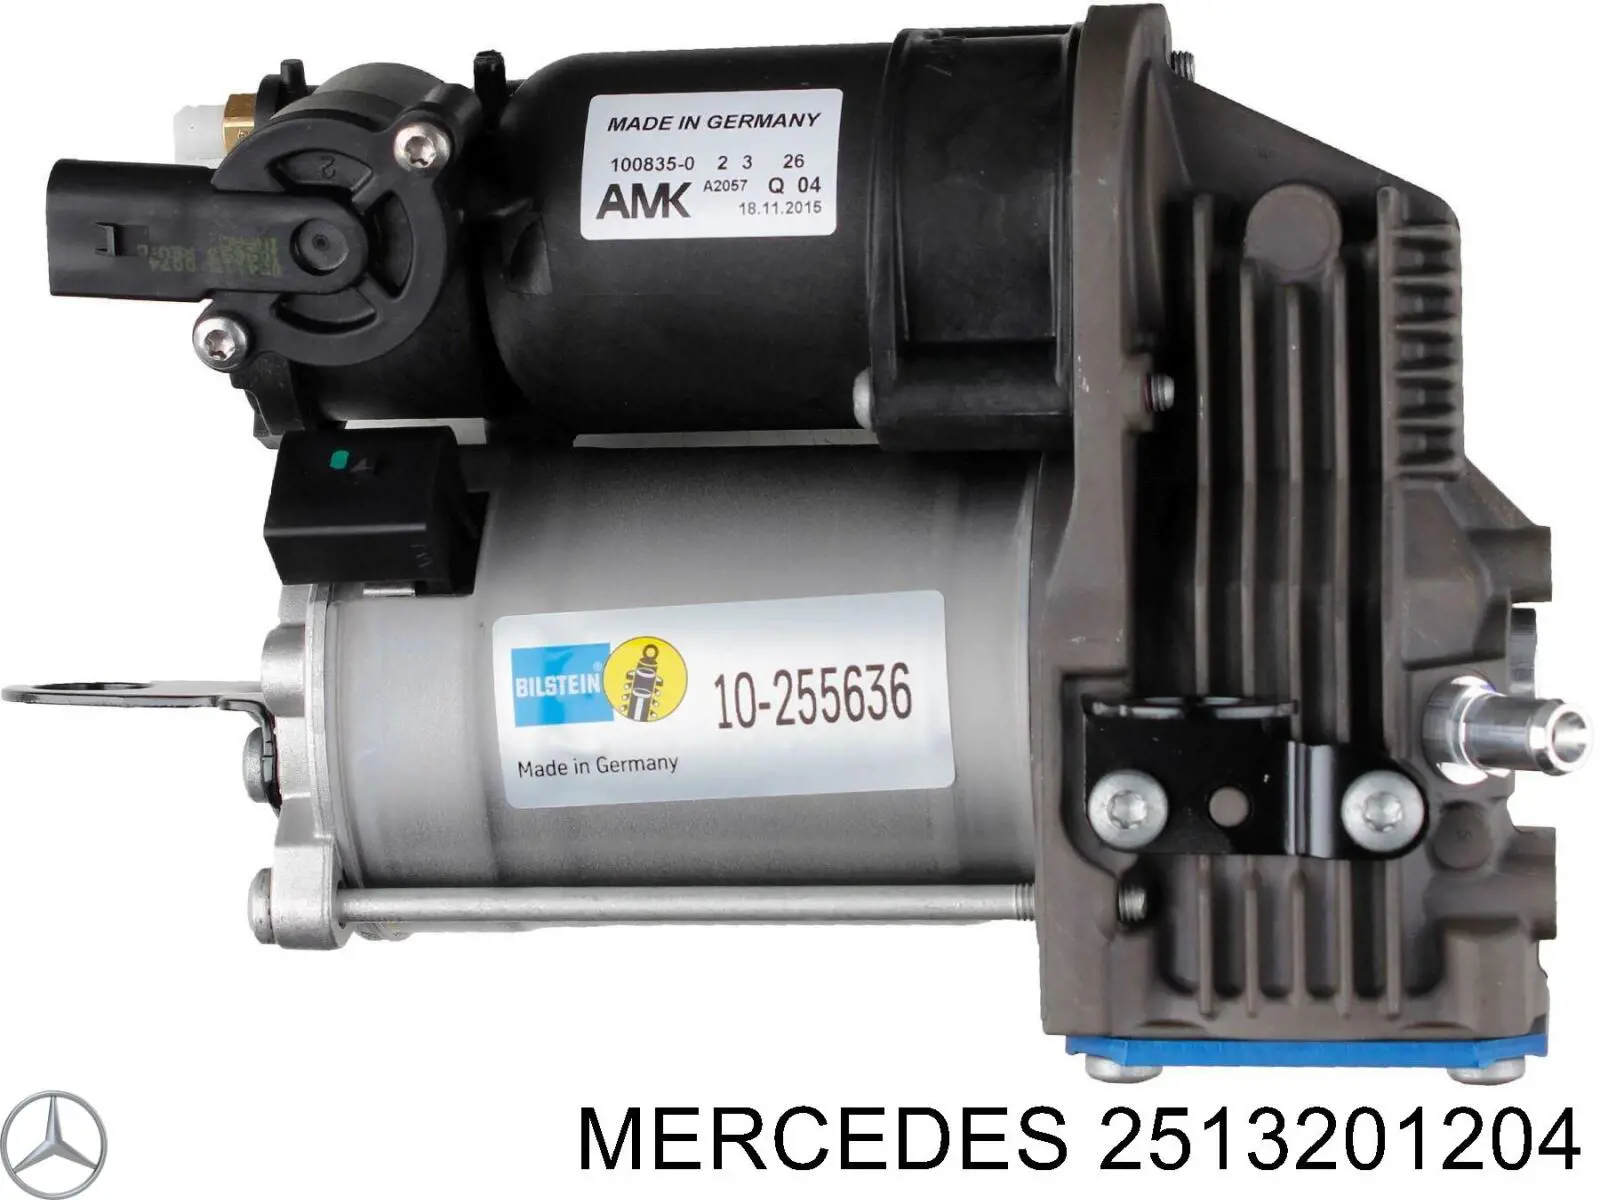 2513201204 Mercedes bomba de compresor de suspensión neumática